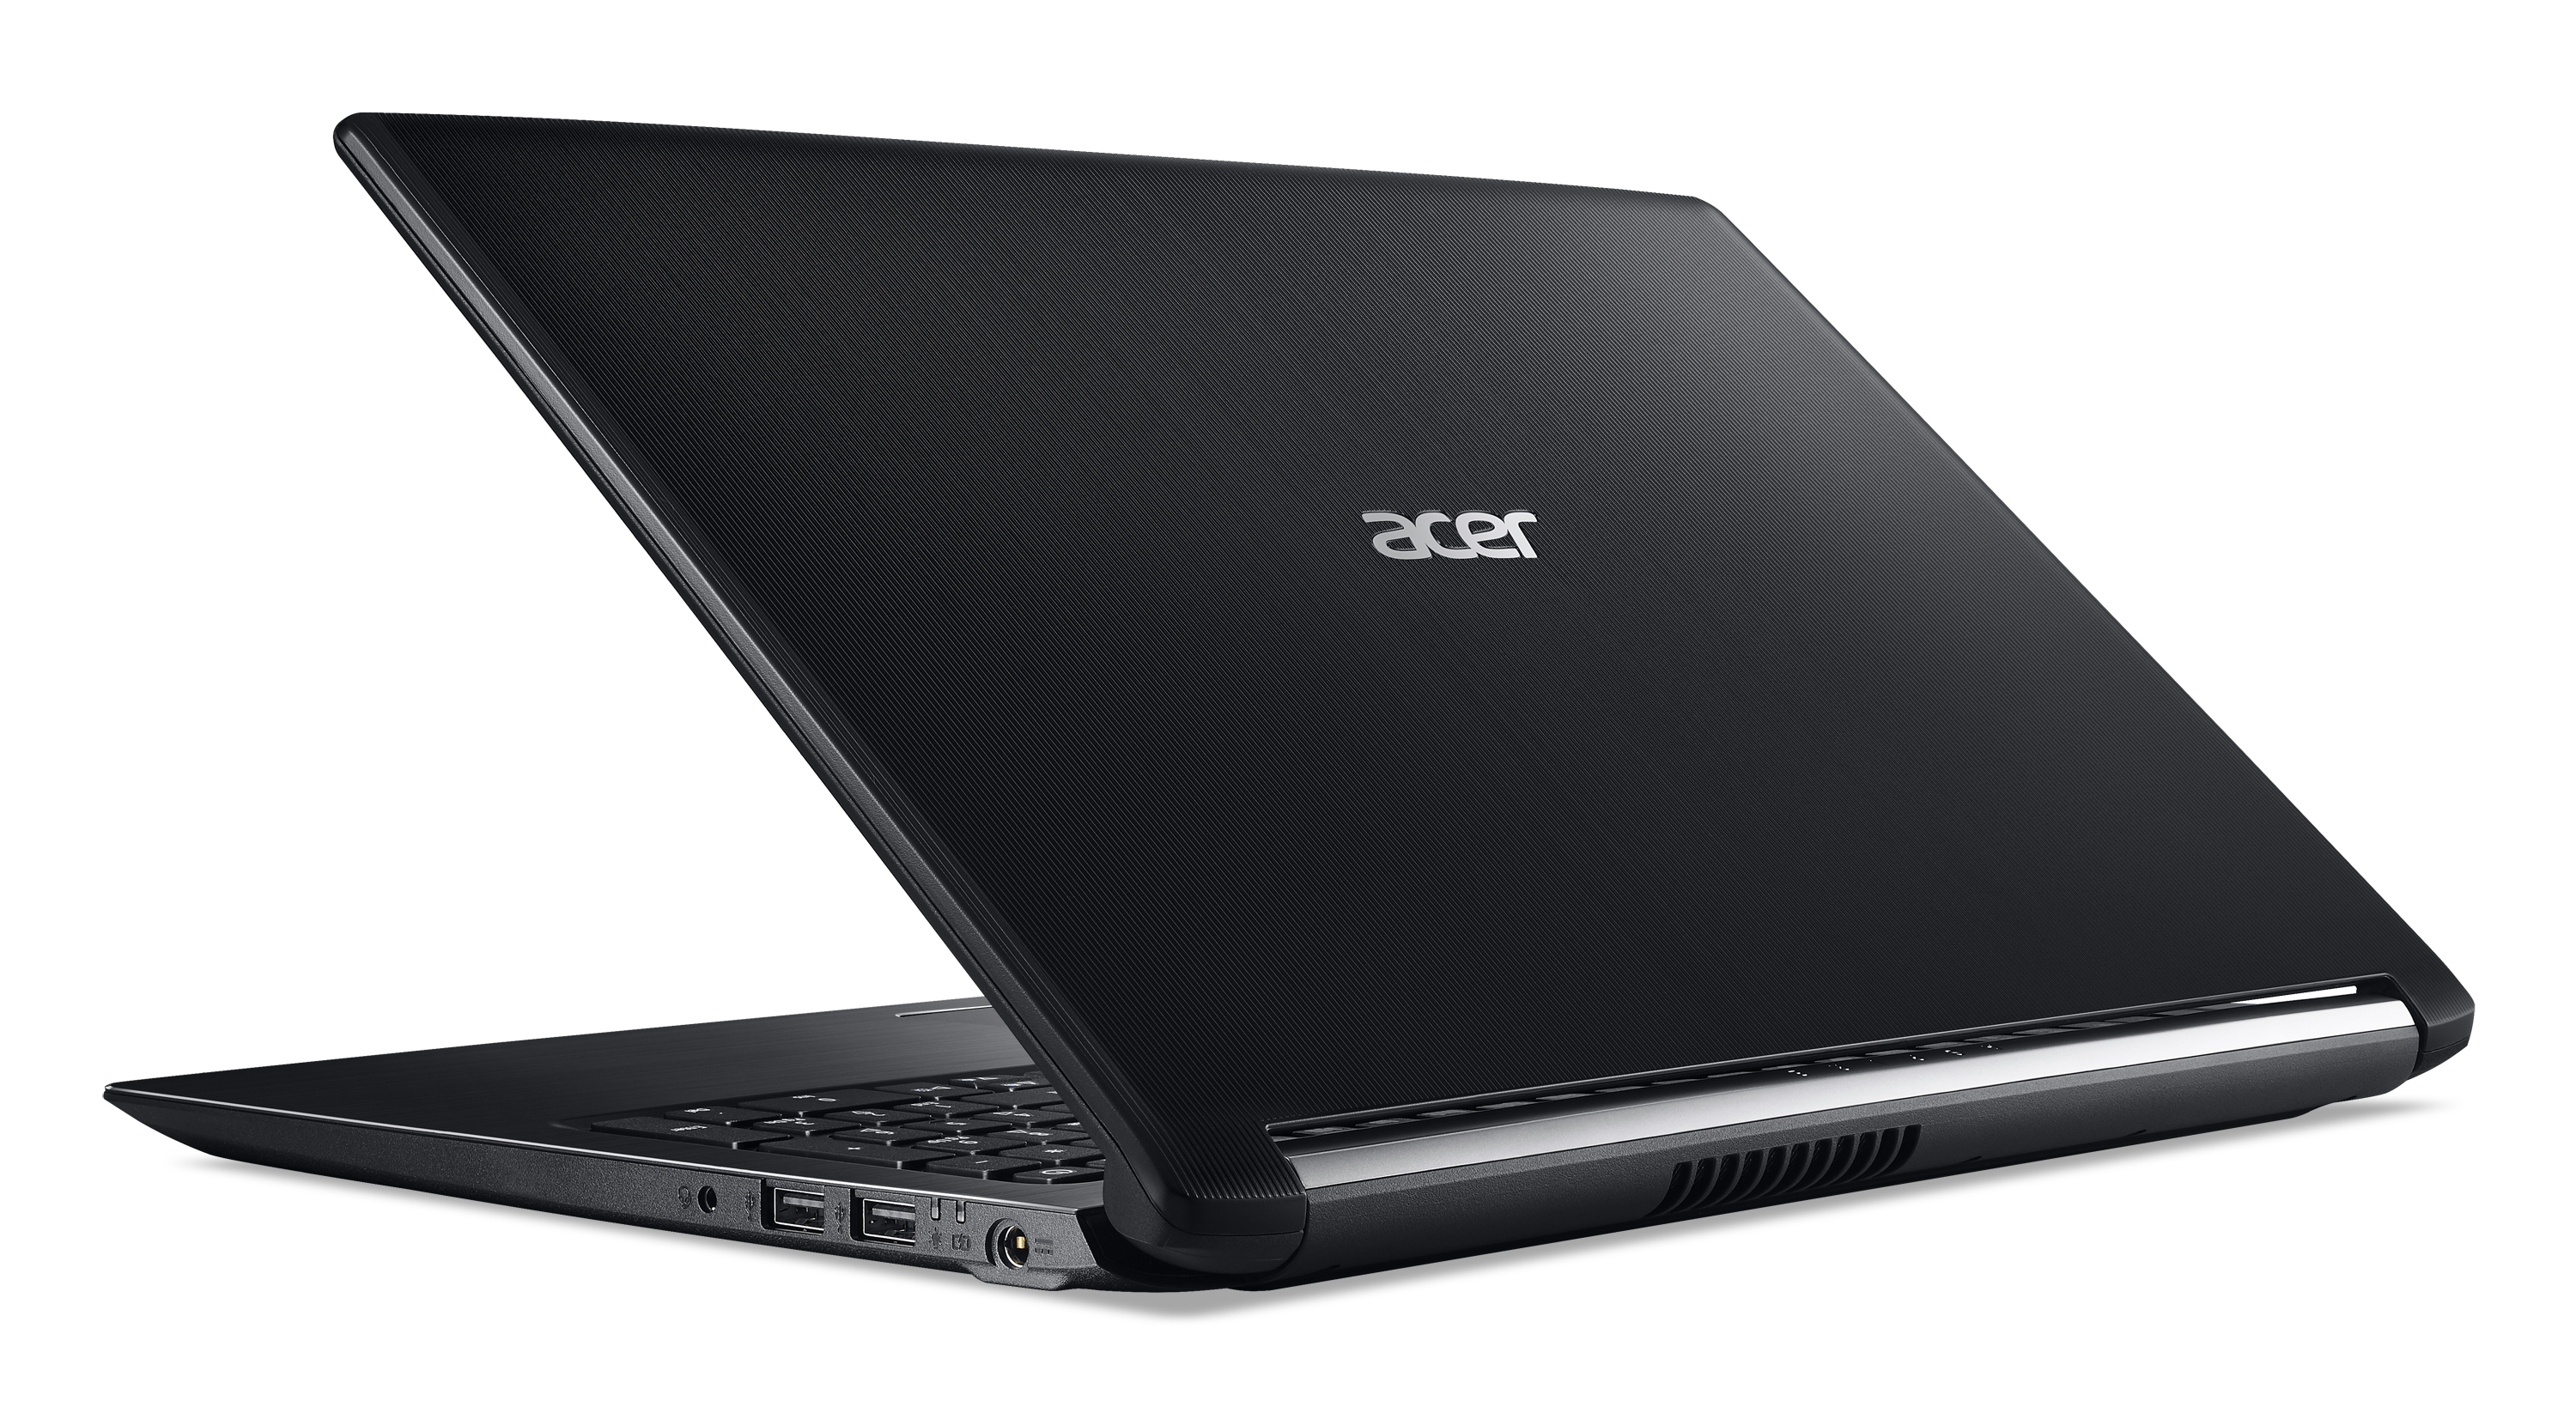 Acer Aspire 5, 15.6" Full HD 1080p, 7th Gen Intel Core i7-7500U, 8GB DDR4, 1TB HDD, Windows 10 Home, A515-51-75 - image 2 of 2